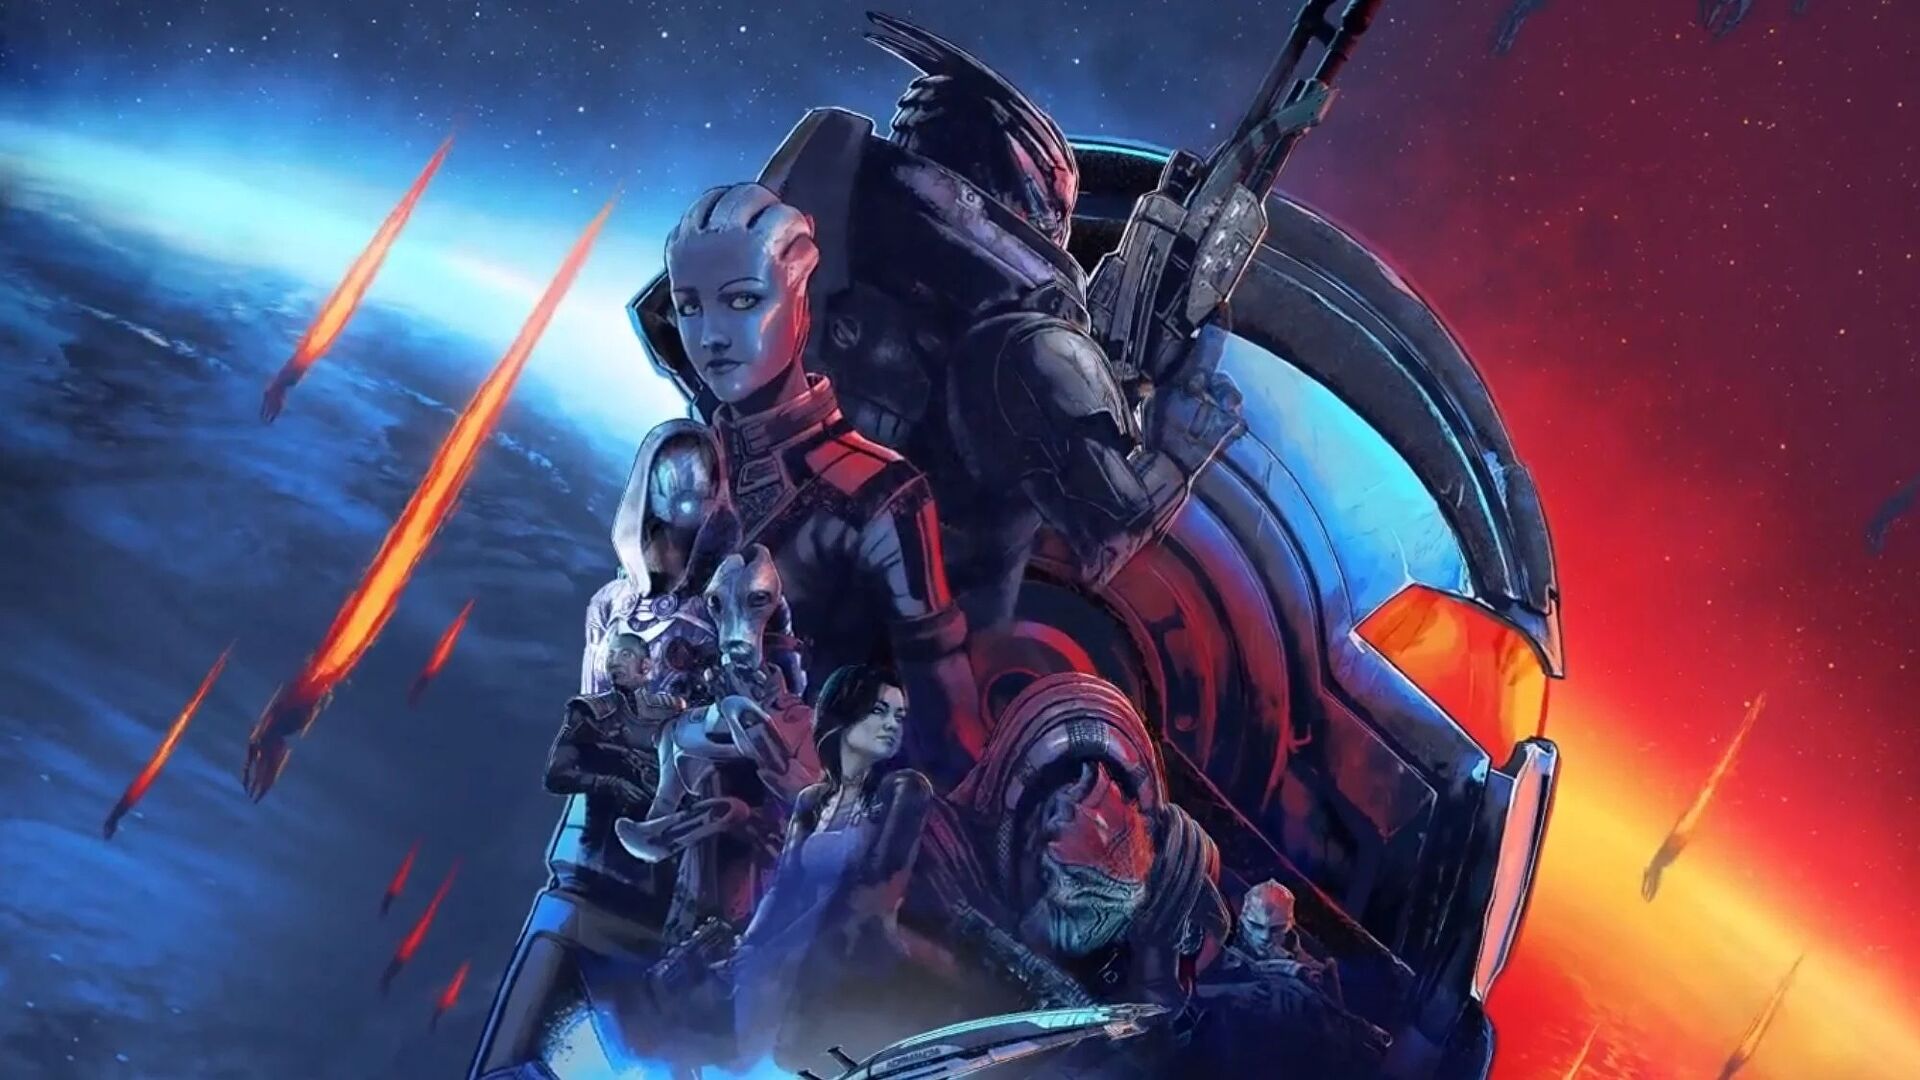 Legendarno izdanje Mass Effect